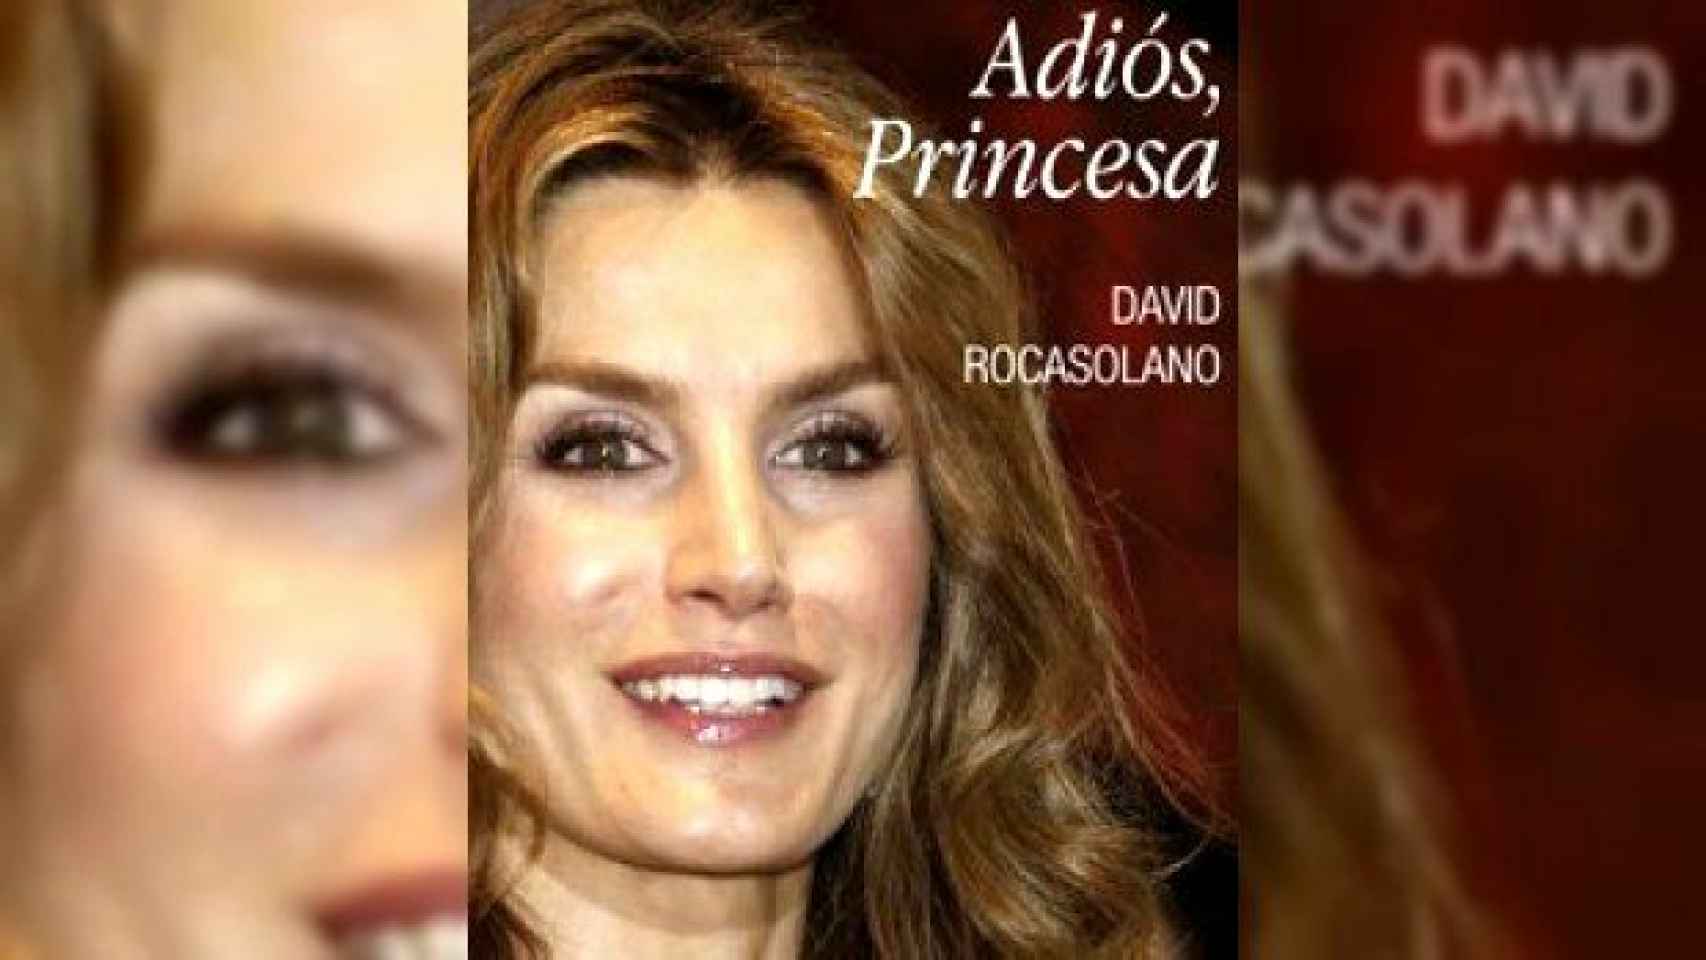 Portada del libro 'Adiós, Princesa' de David Rocasolano, primo de la reina Letizia.